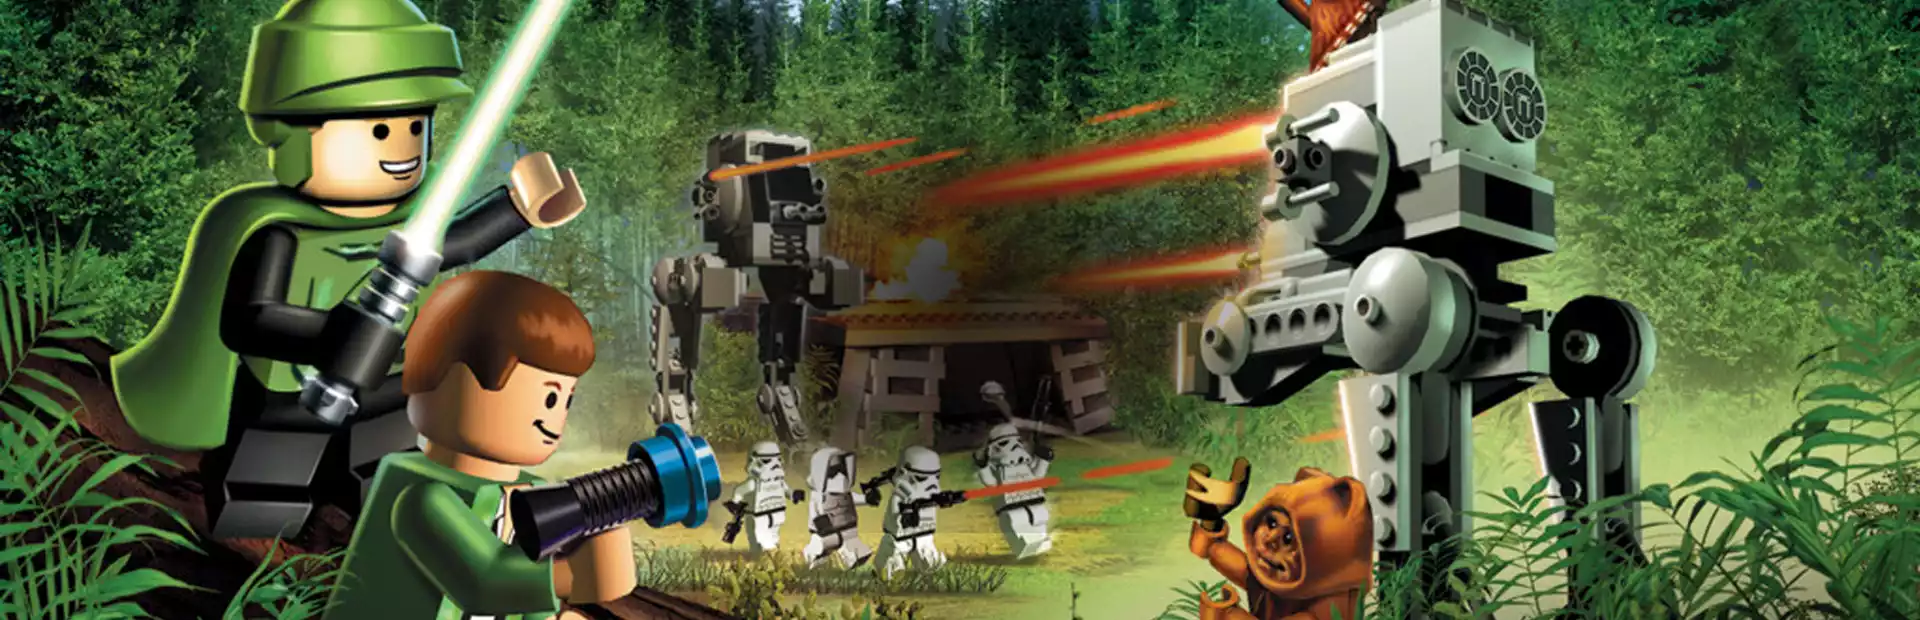 LEGO Star Wars: The Complete Saga Steam Key GLOBAL